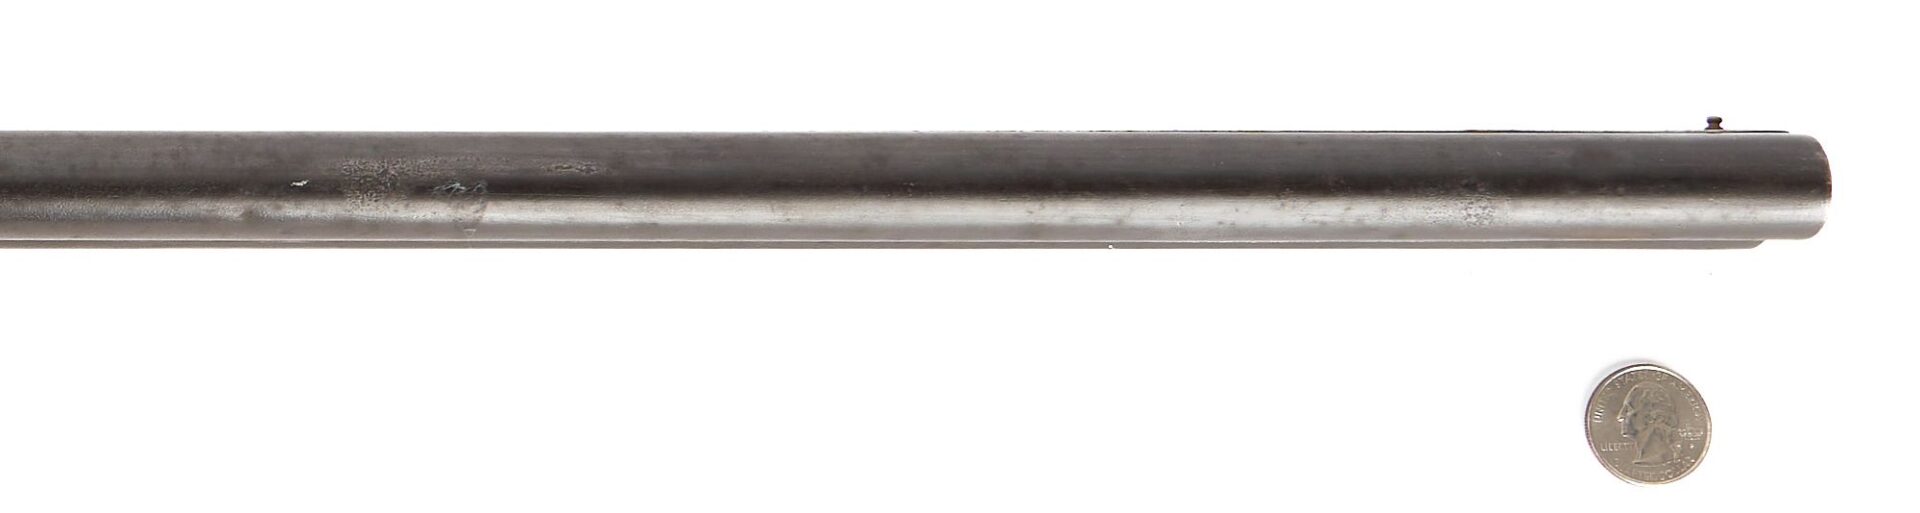 Lot 928: T. Barker Retailed Belgian Double Barrel 12 Gauge Percussion Shotgun